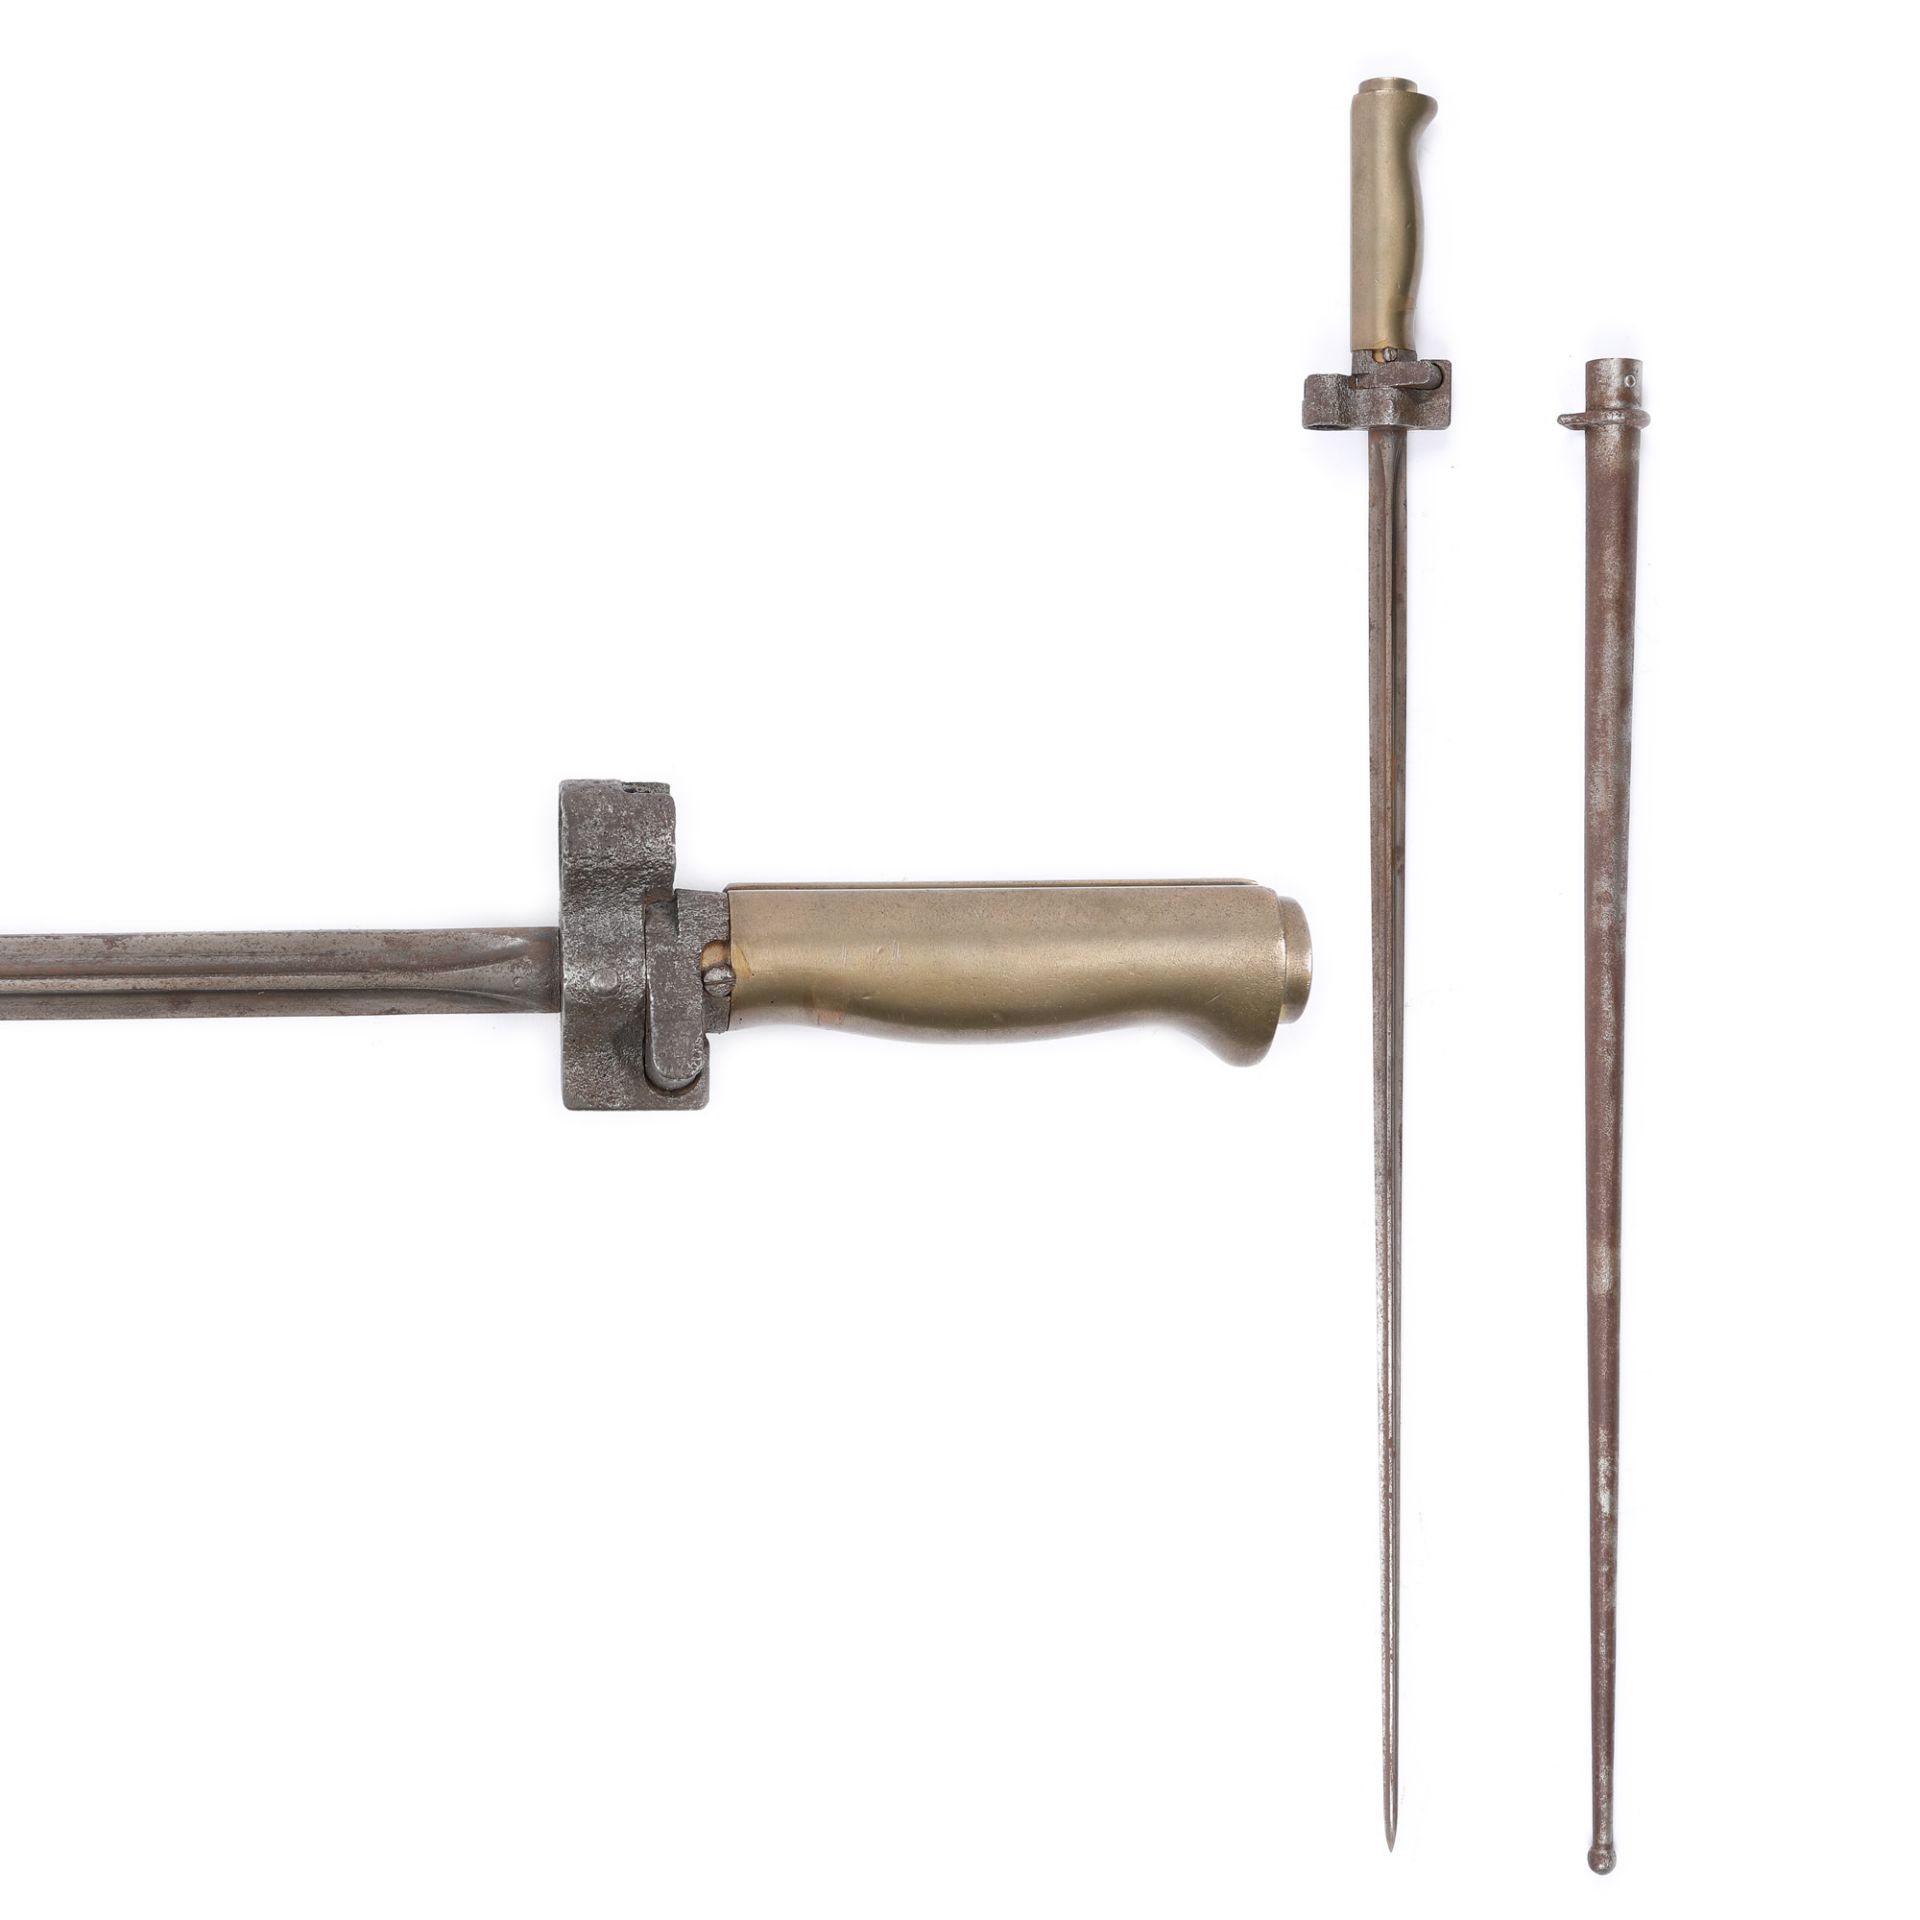 Bayonet for Lebel rifle, with sheath, model 1886-15, France, World War I period